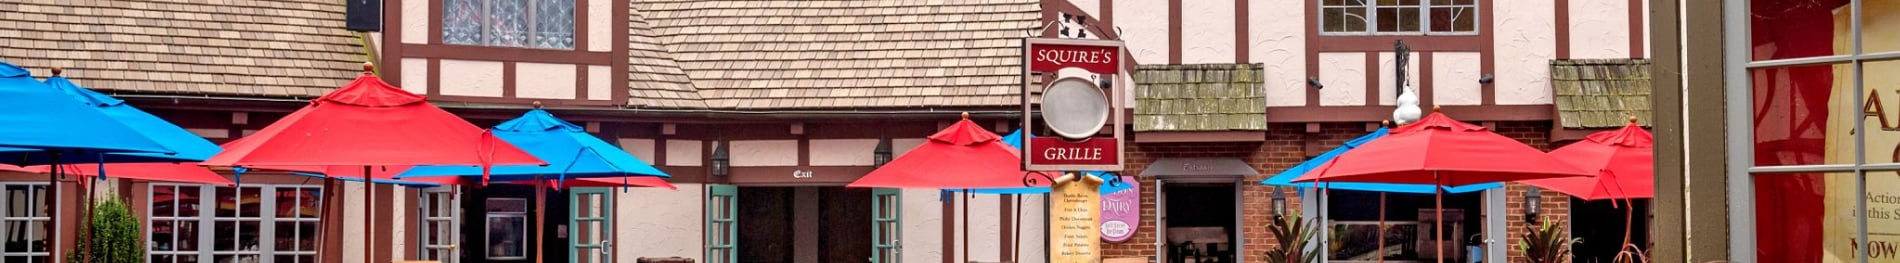 Squires Grill at Busch Gardens Williamsburg.